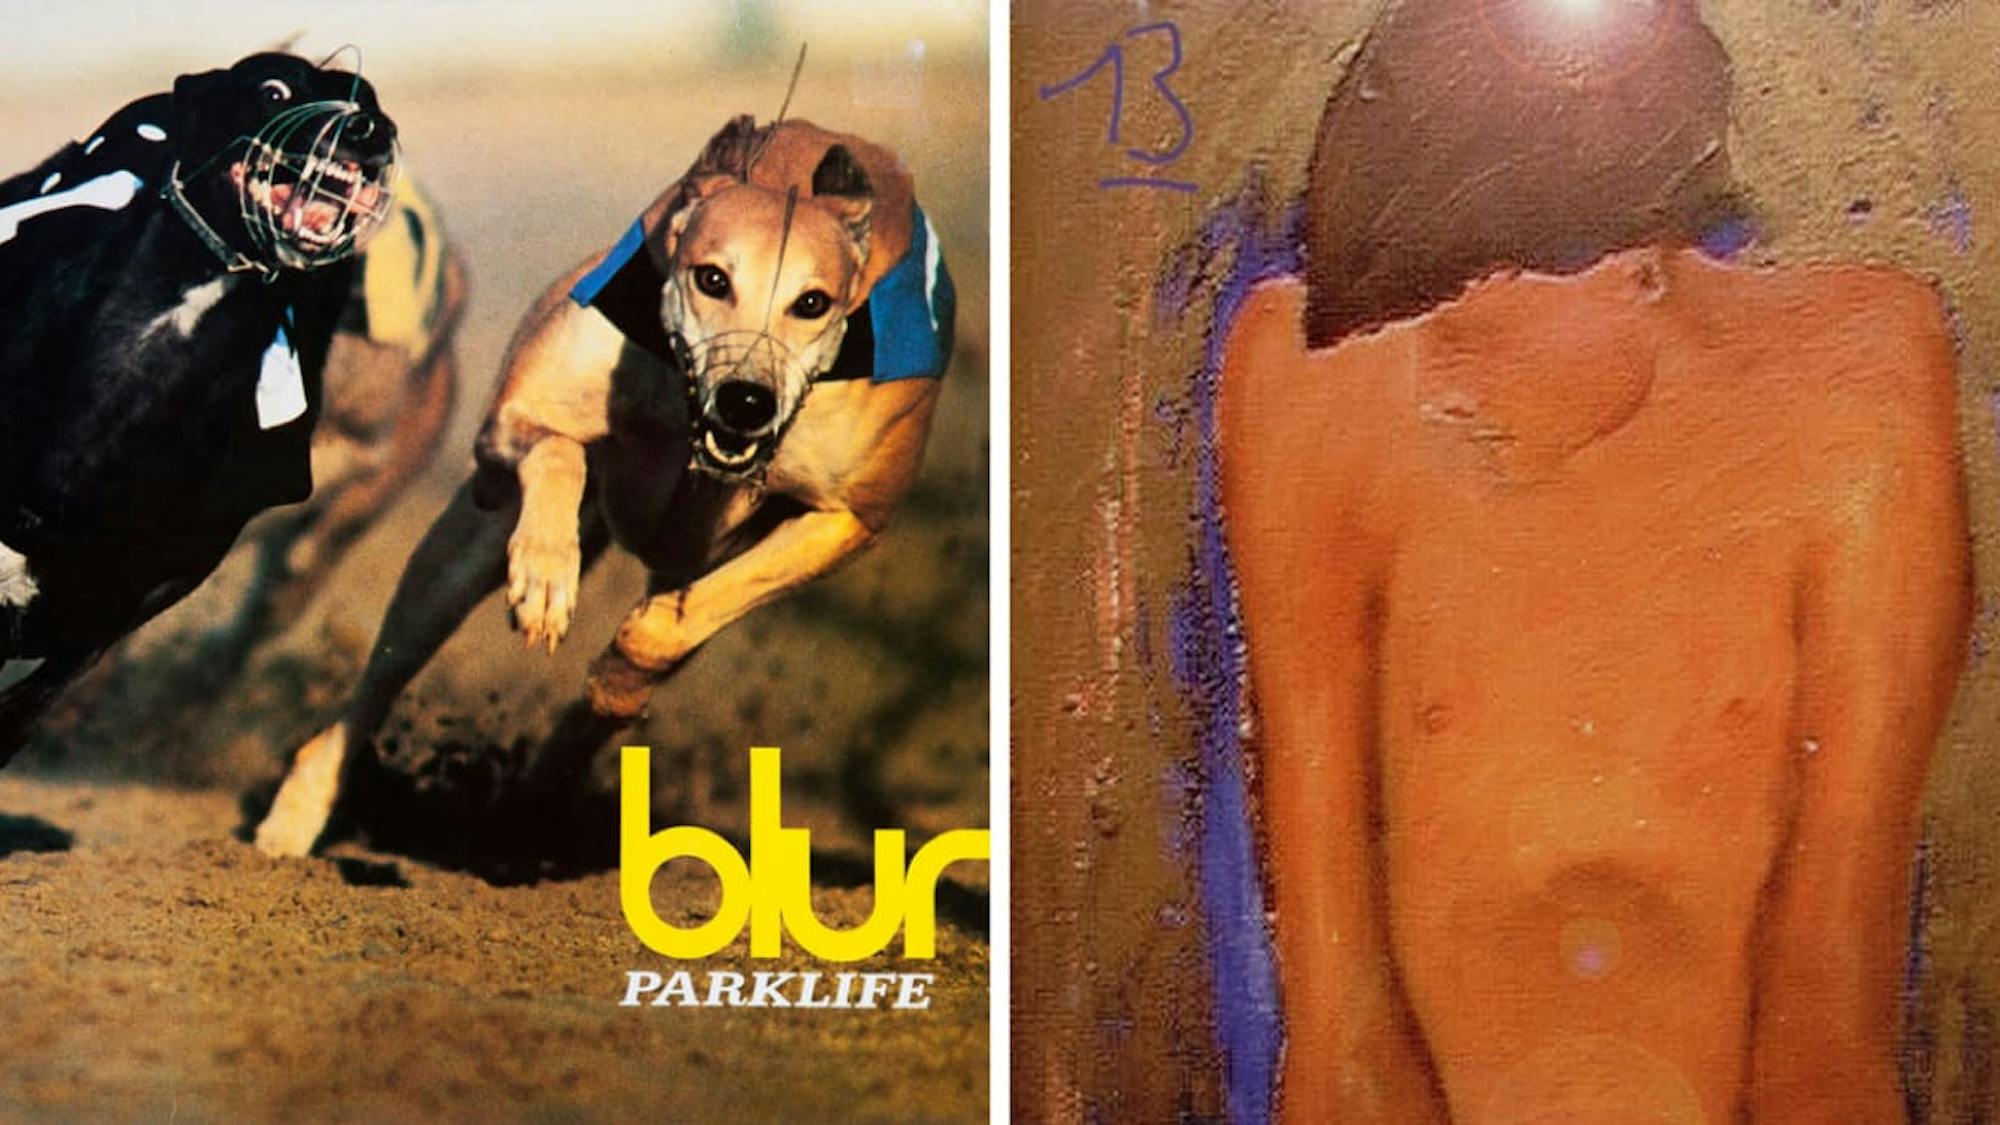 Blur albums Parklife and 13